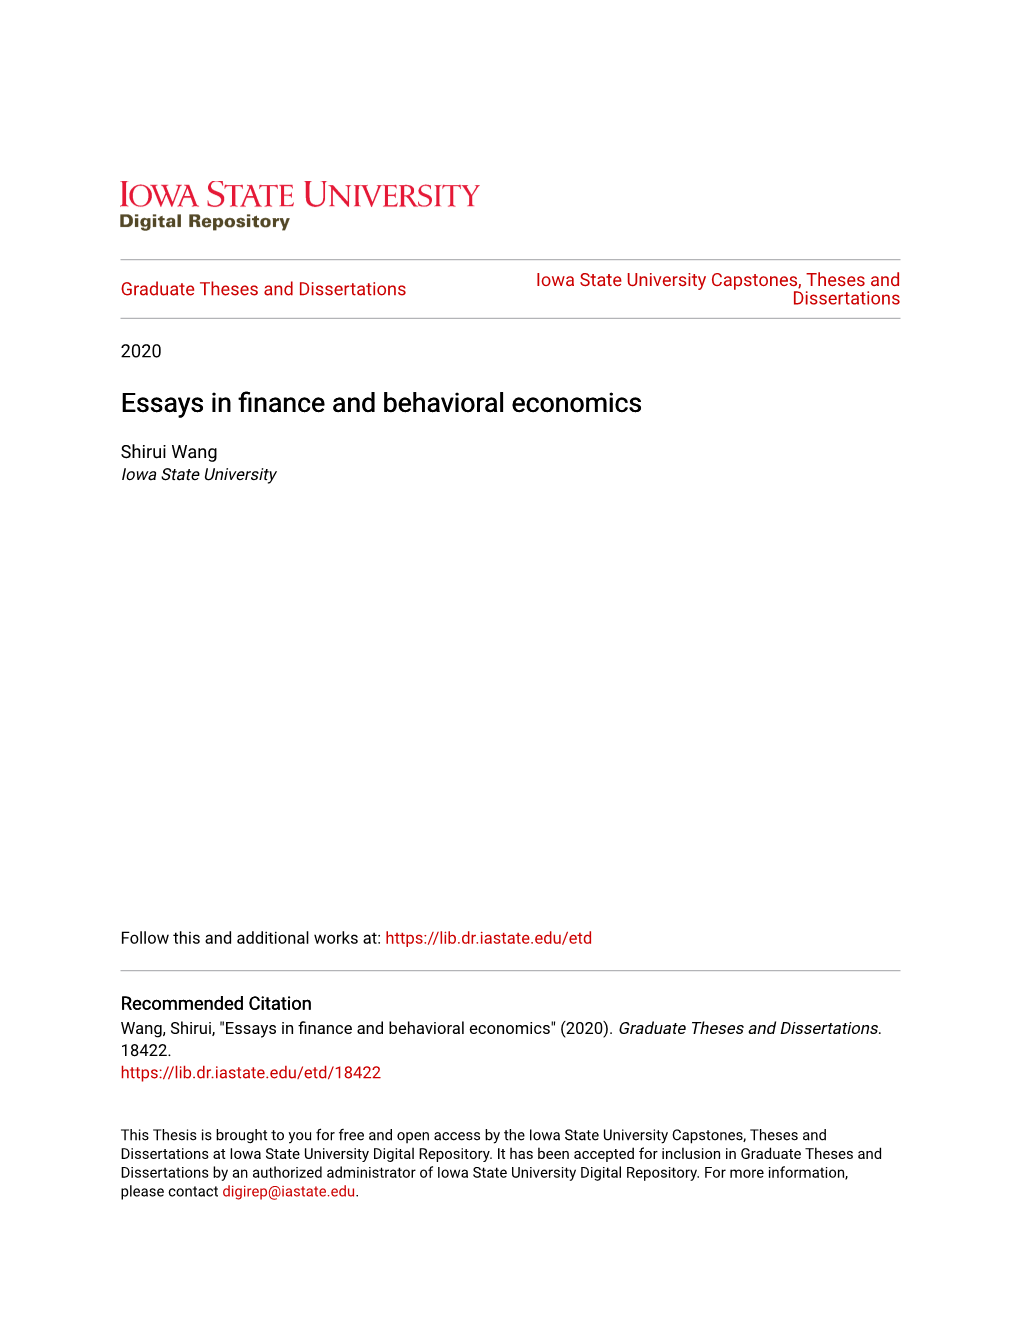 Essays in Finance and Behavioral Economics